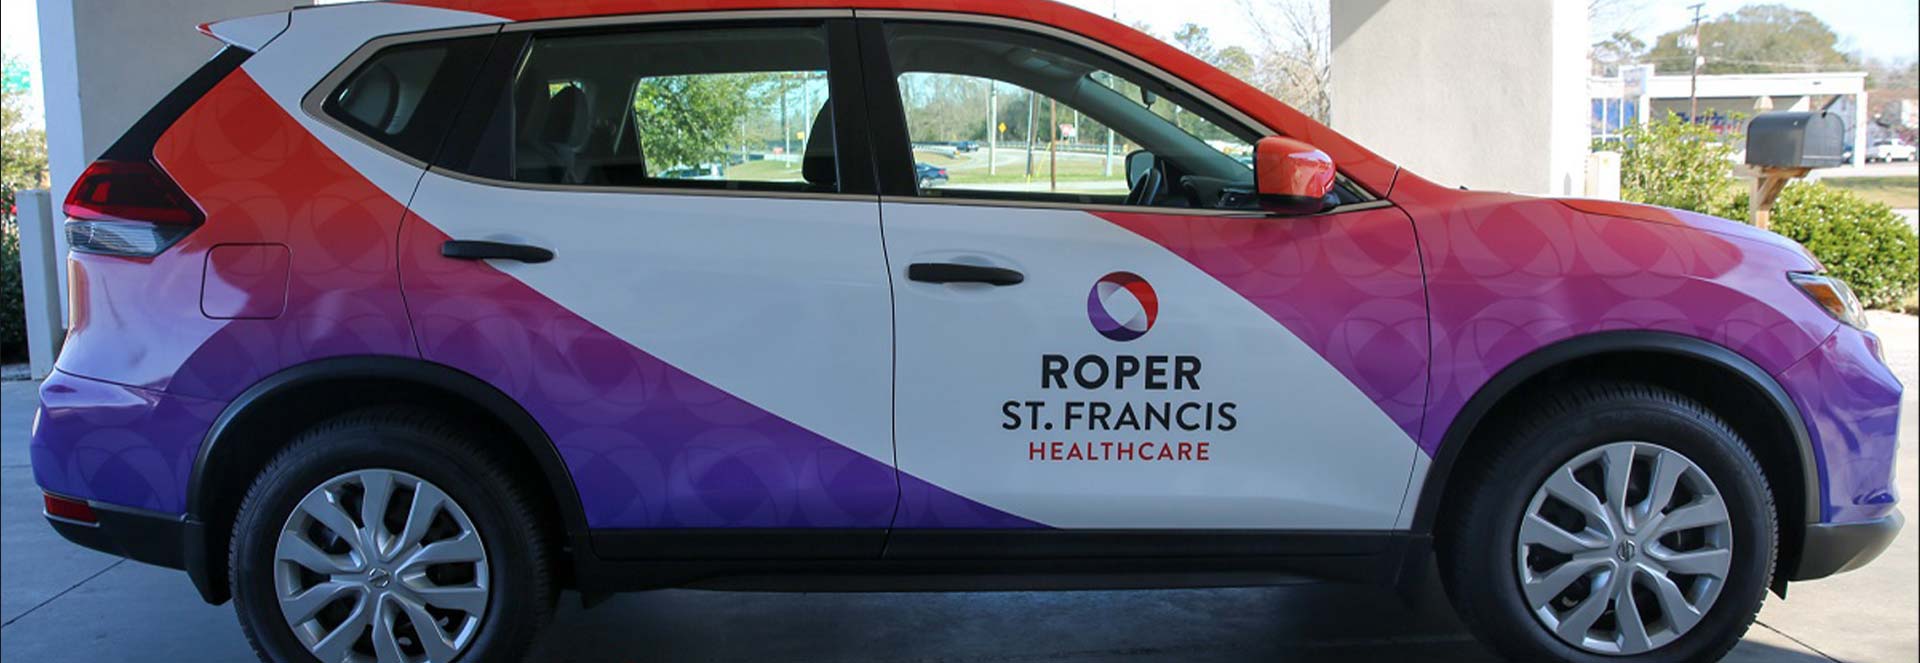 Roper St Francis Healthcare logo on a custom Nissan Rogue